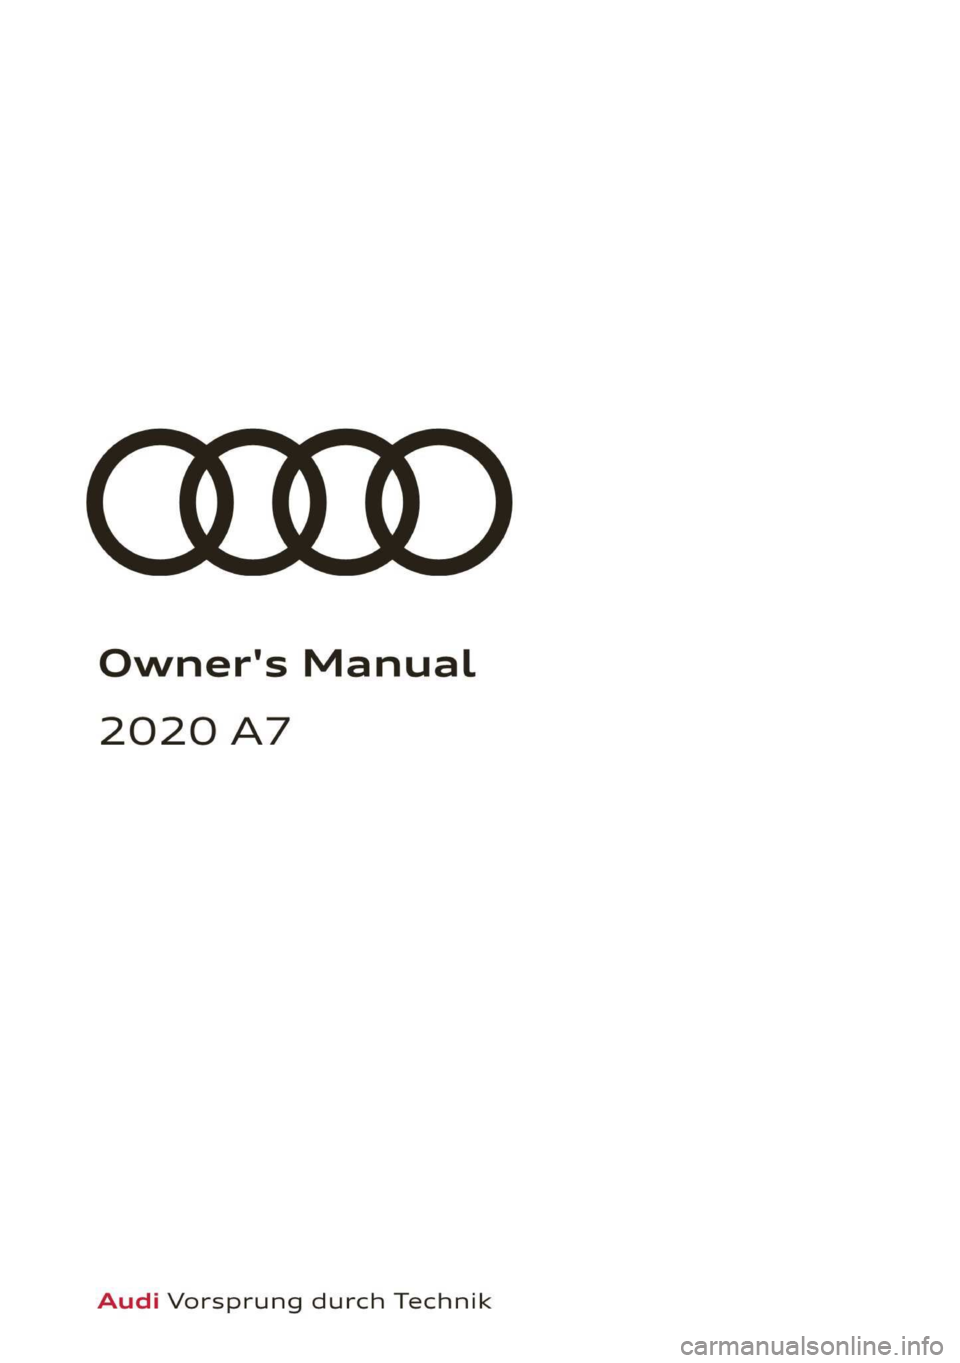 AUDI A7 2020  Owners Manual Owner's Manual 
2020 AZ 
Audi Vorsprung durch Technik  